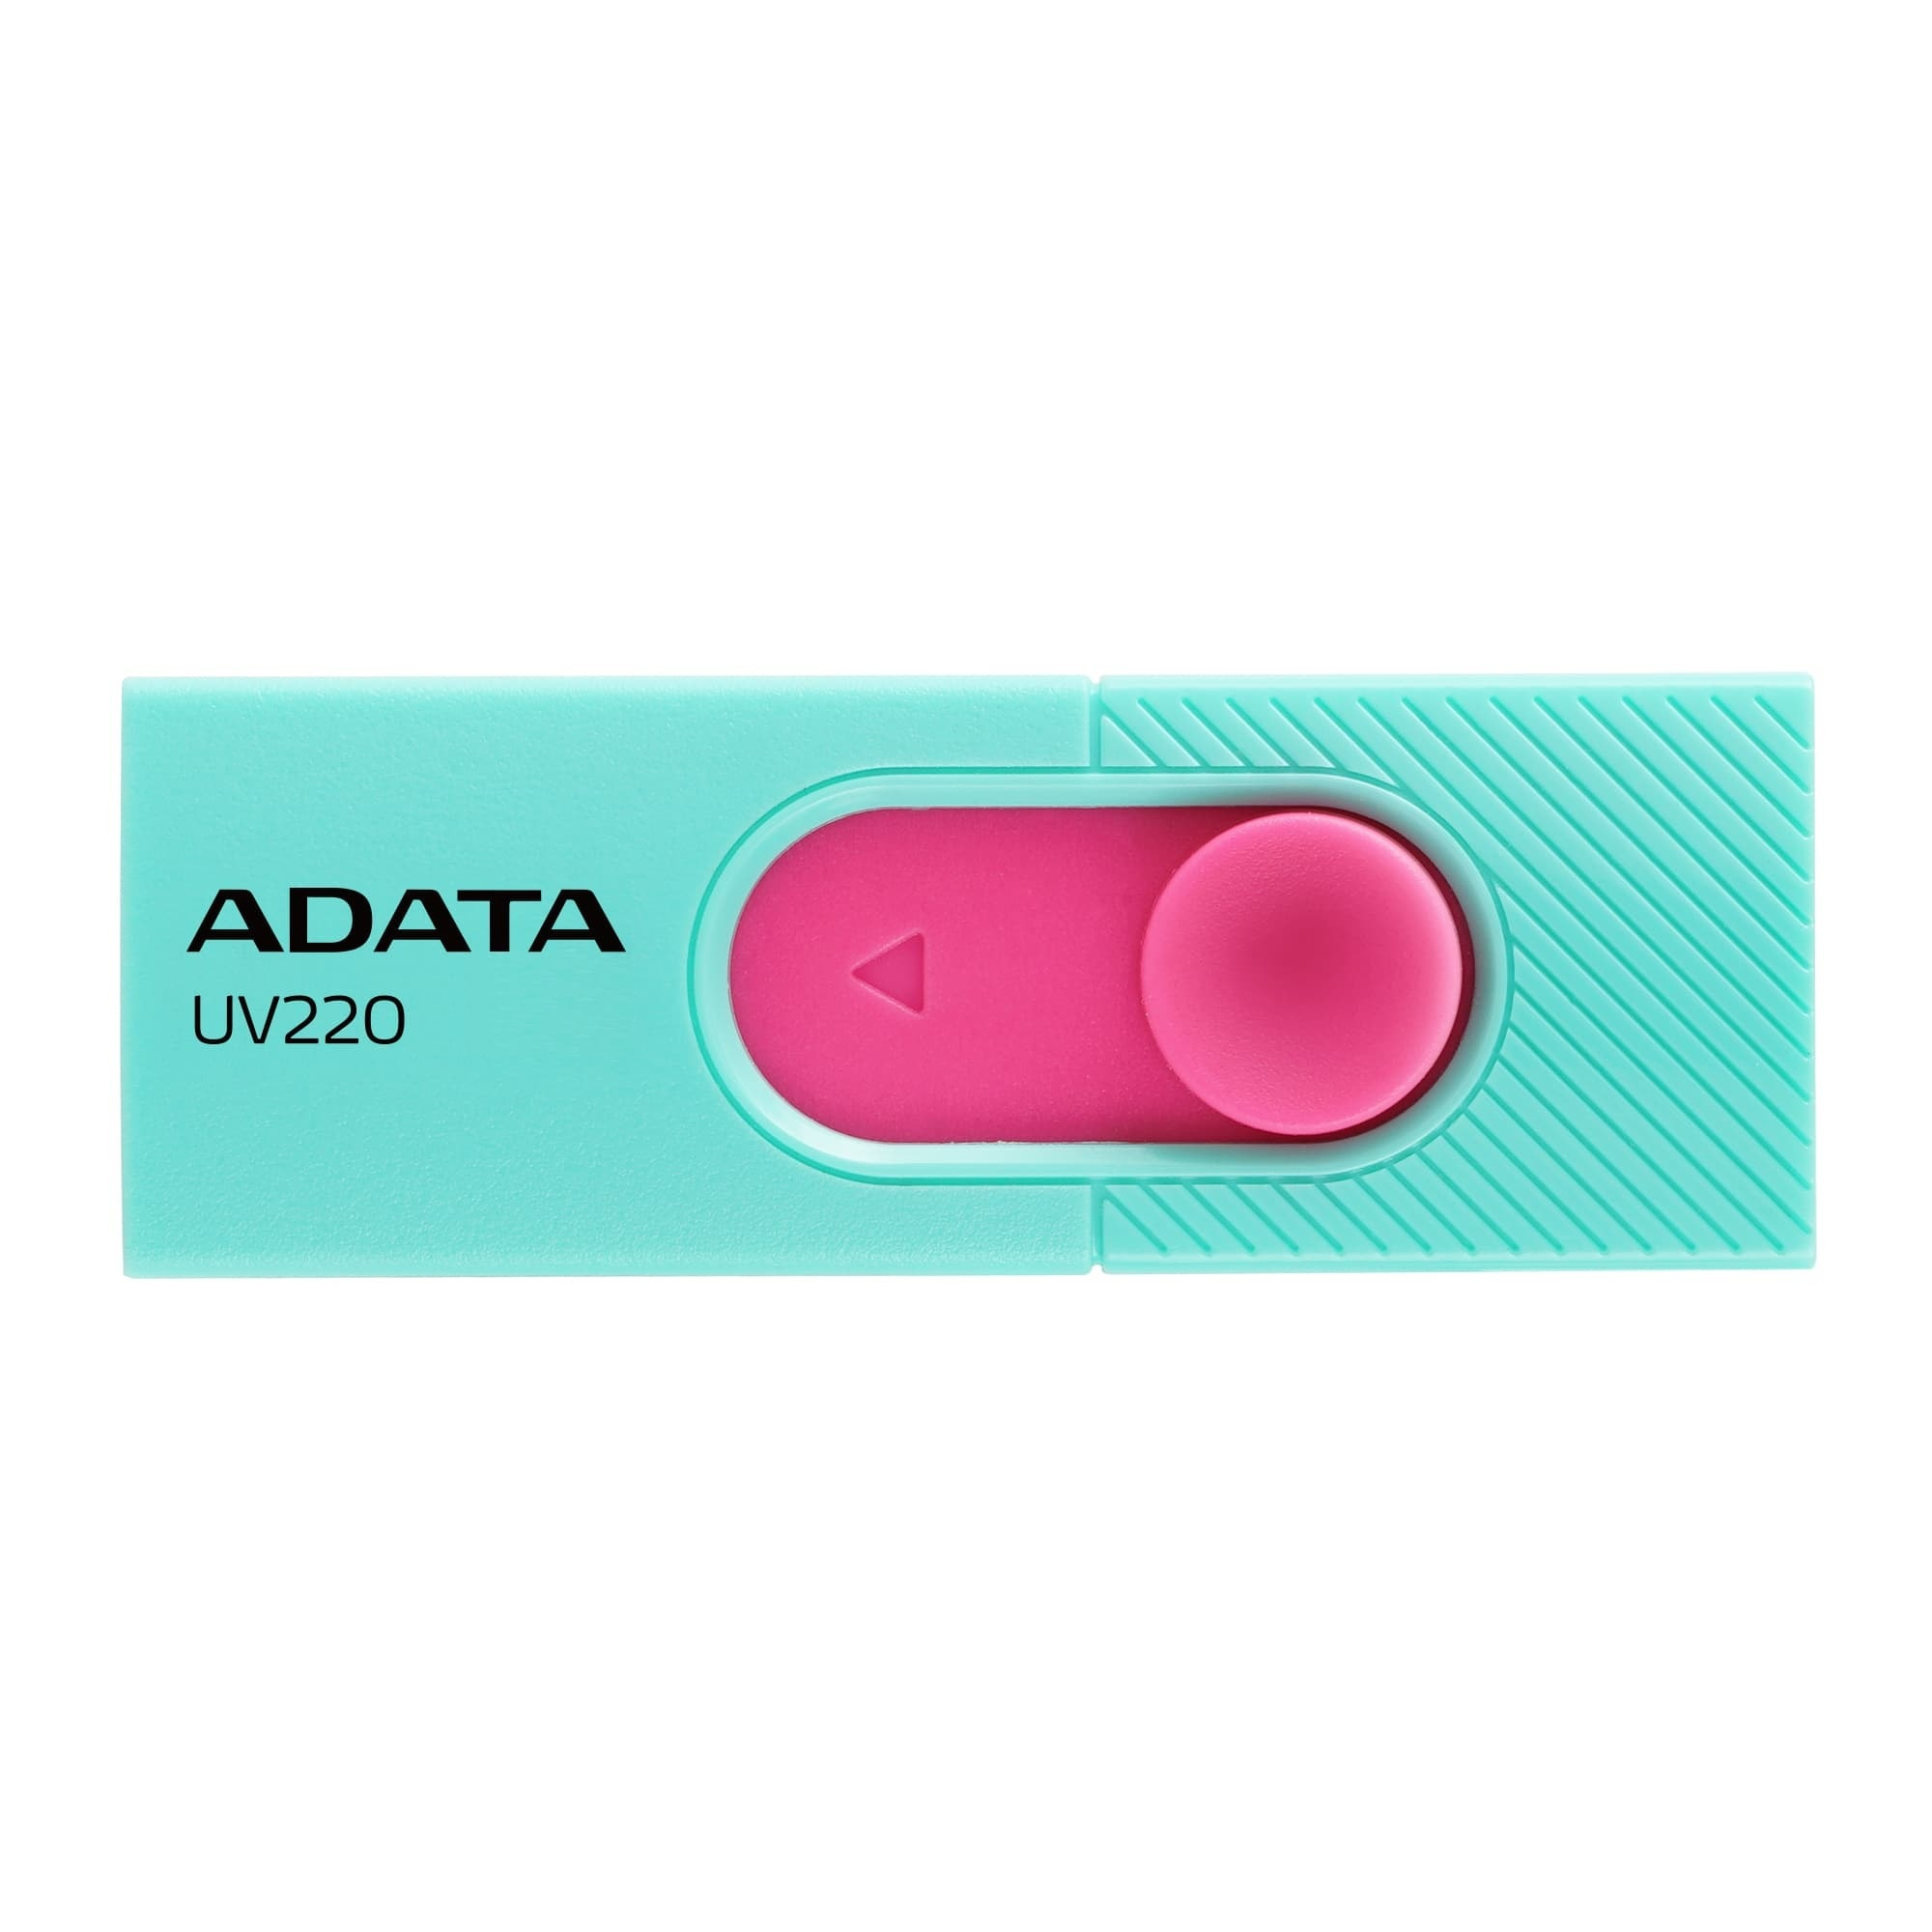 Memoria USB ADATA AUV220-32G-RGNPK - Turquesa/rosa